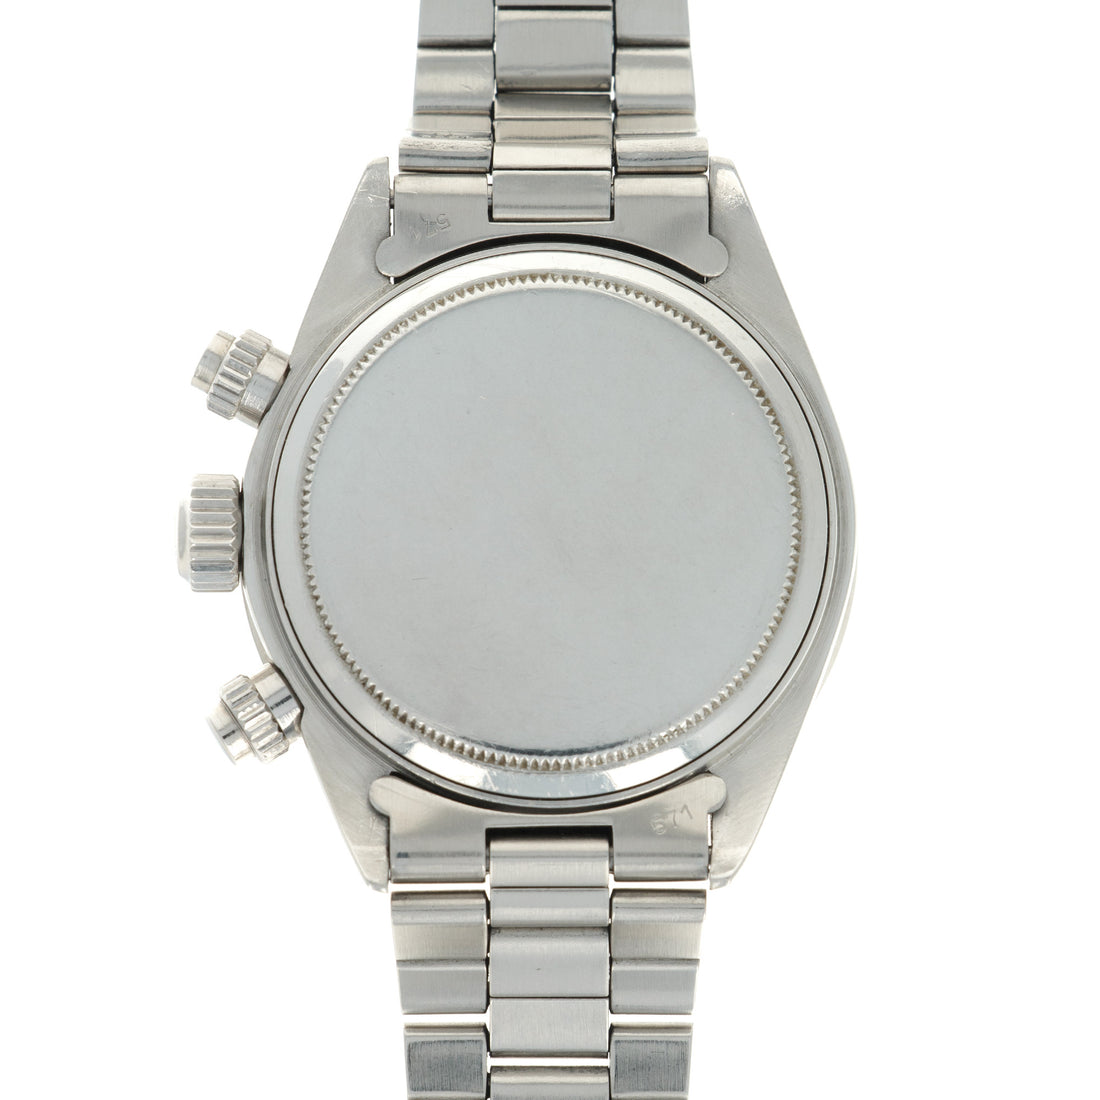 Rolex Oyster Cosmograph Daytona Watch Ref. 6263